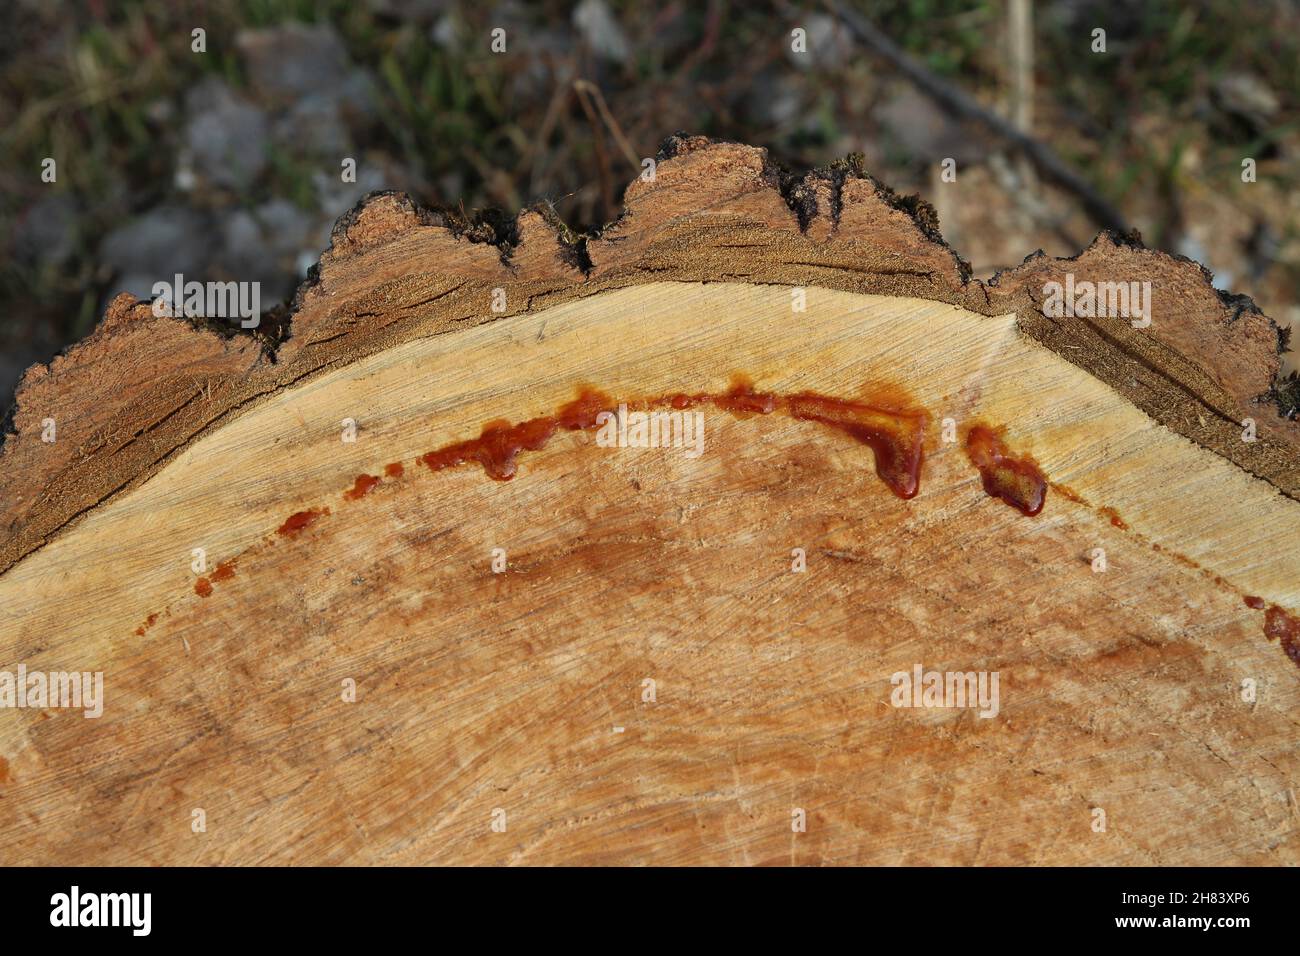 A tree stump of a chopped tree. Stock Photo